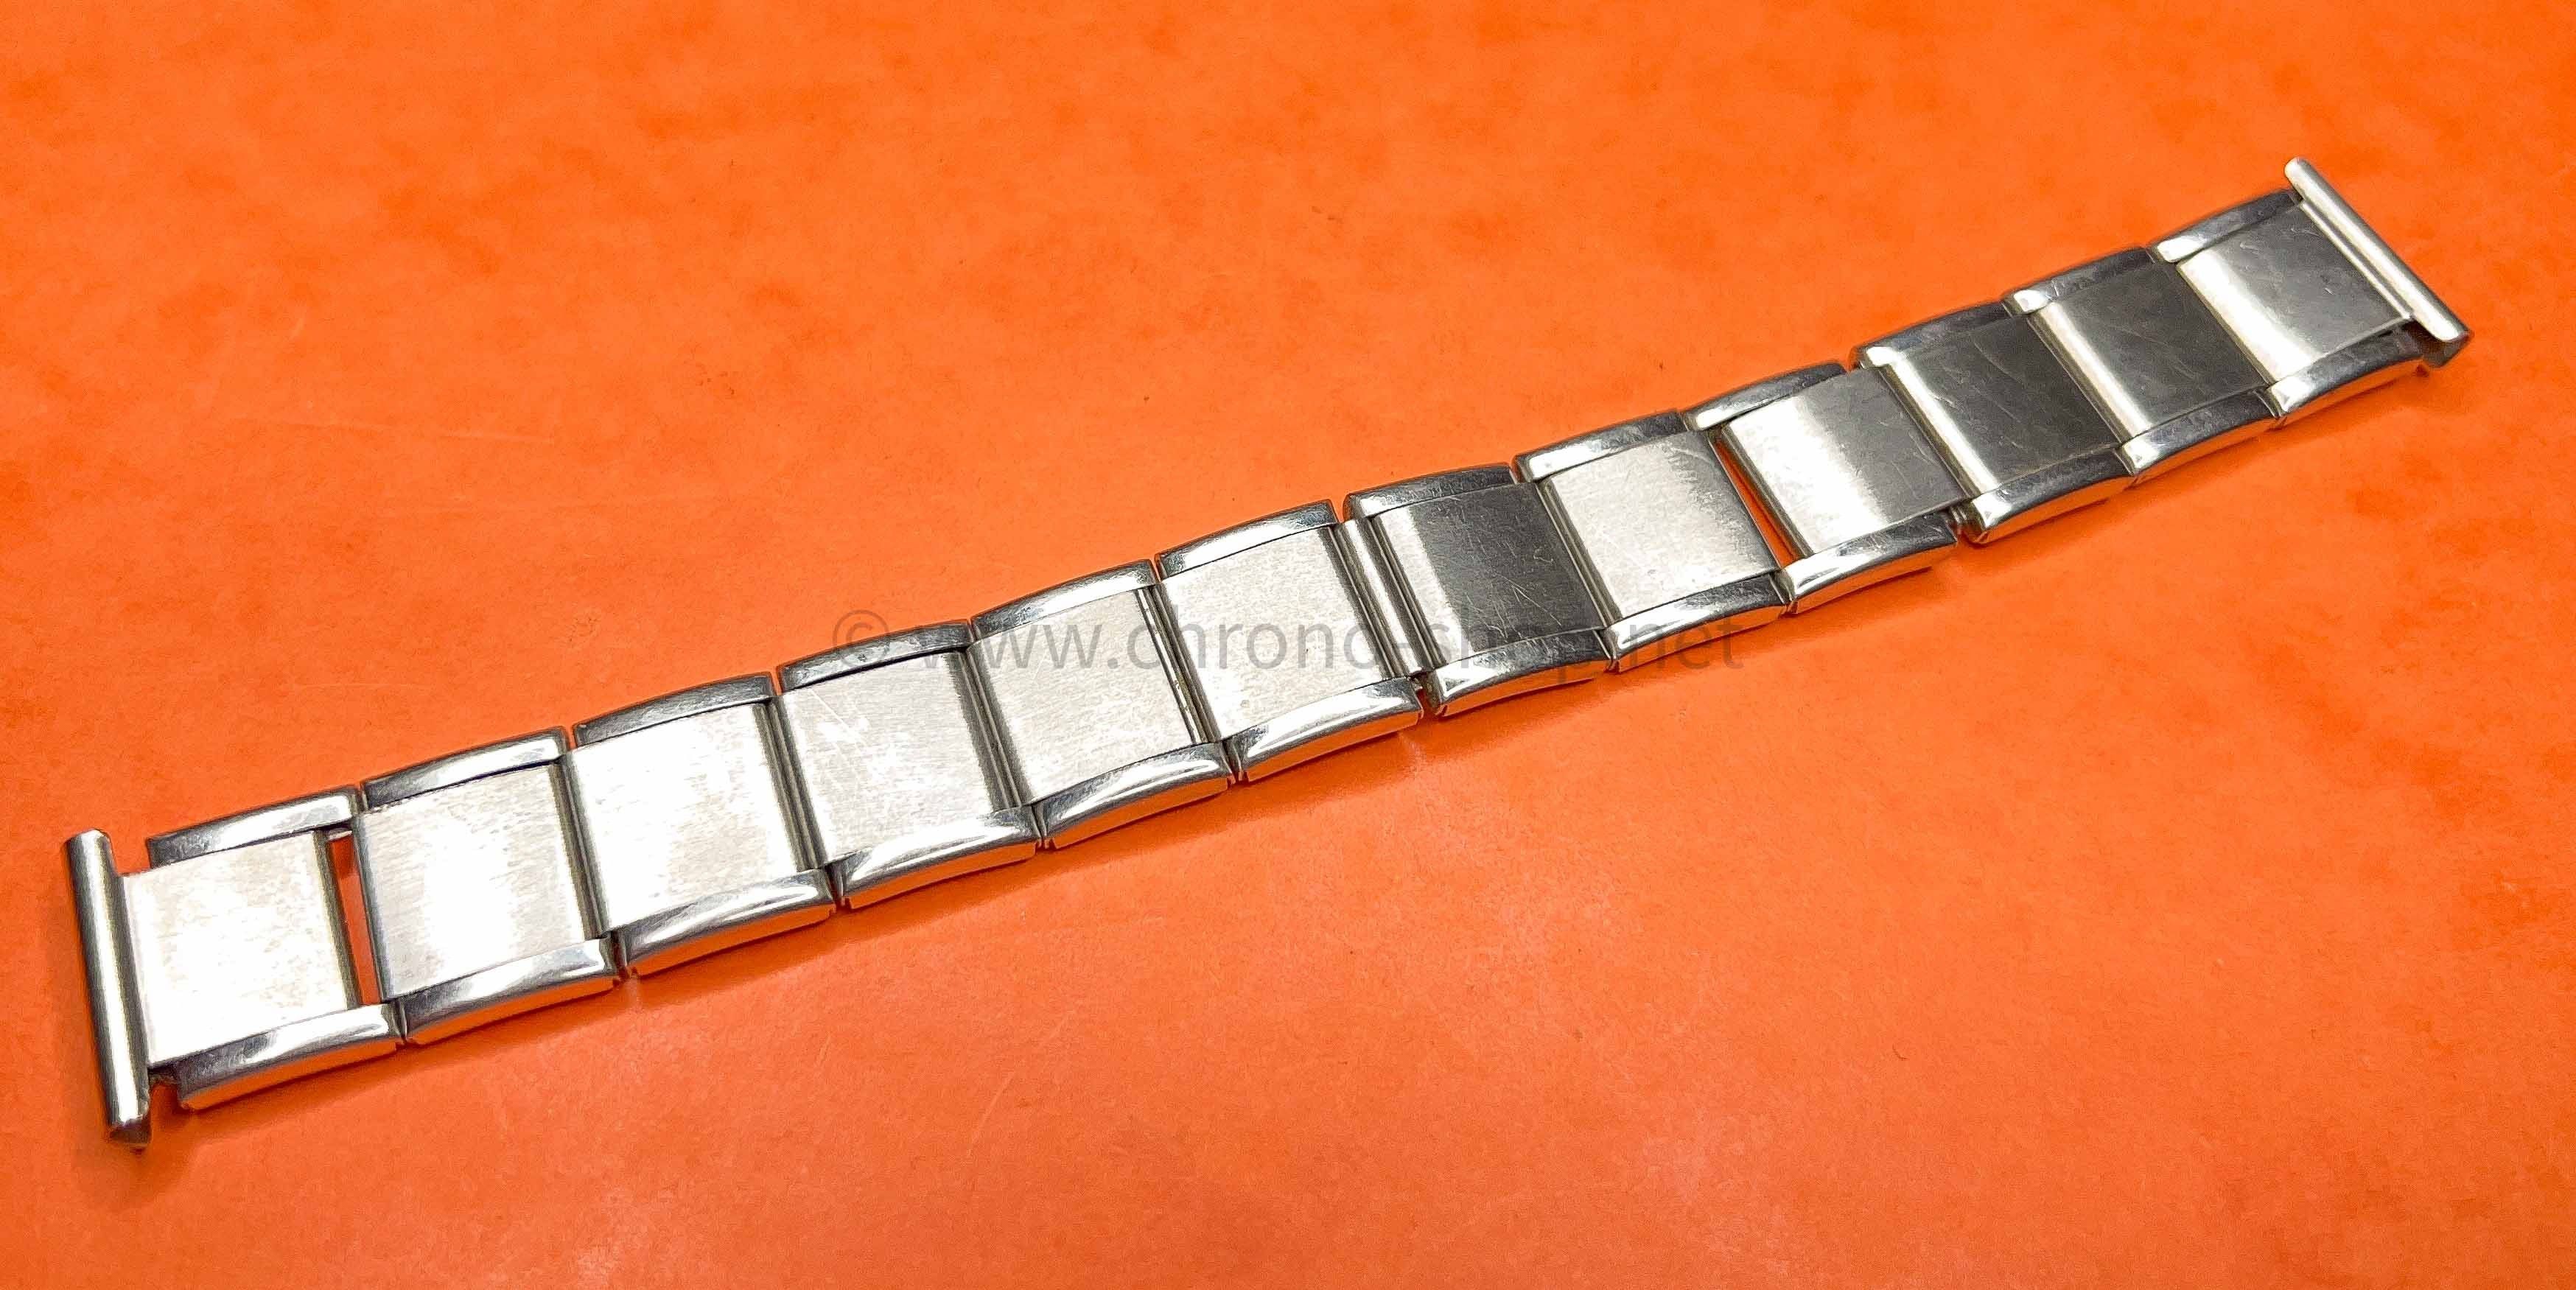 Watch stainless steel mesh watch bracelets from Germany | Island Watch